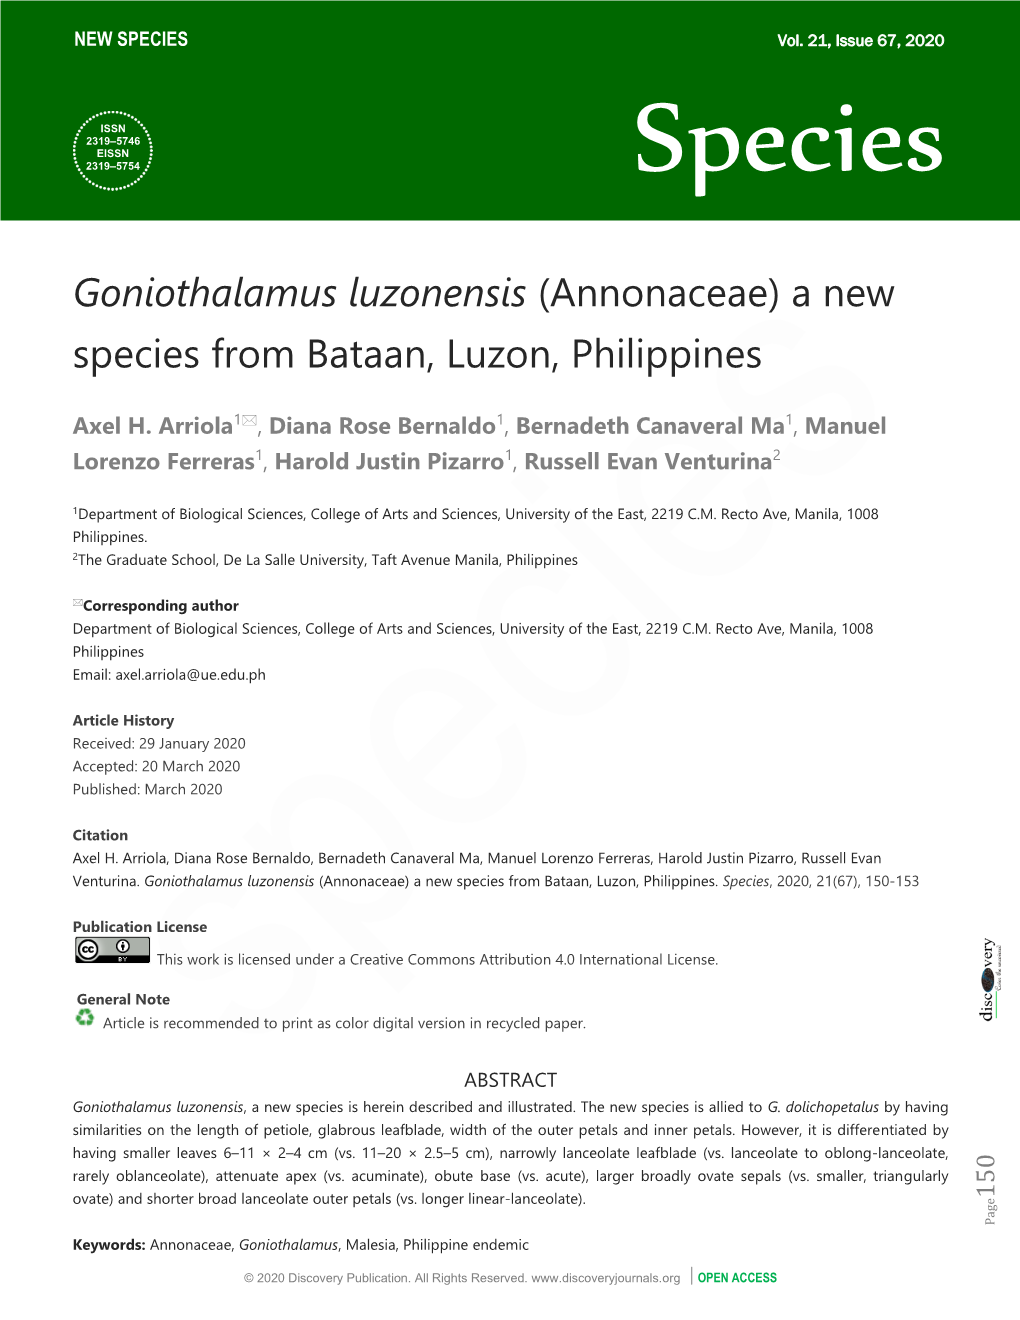 Goniothalamus Luzonensis (Annonaceae) a New Species from Bataan, Luzon, Philippines